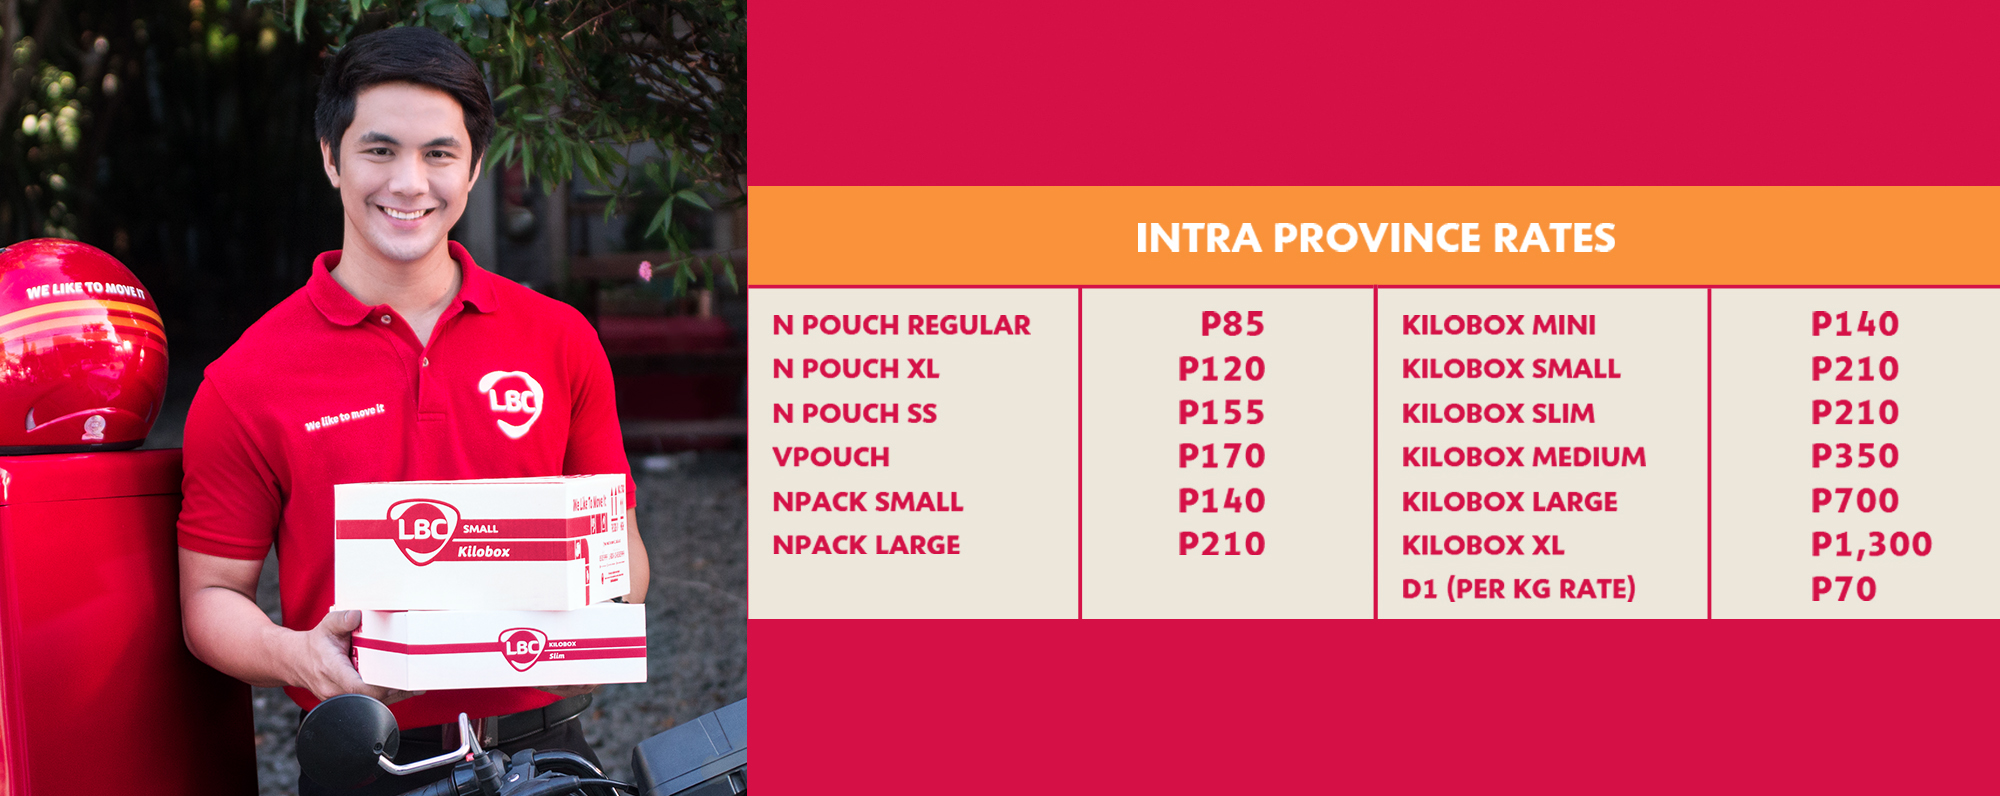 lbc intra province rates visayas mindanao